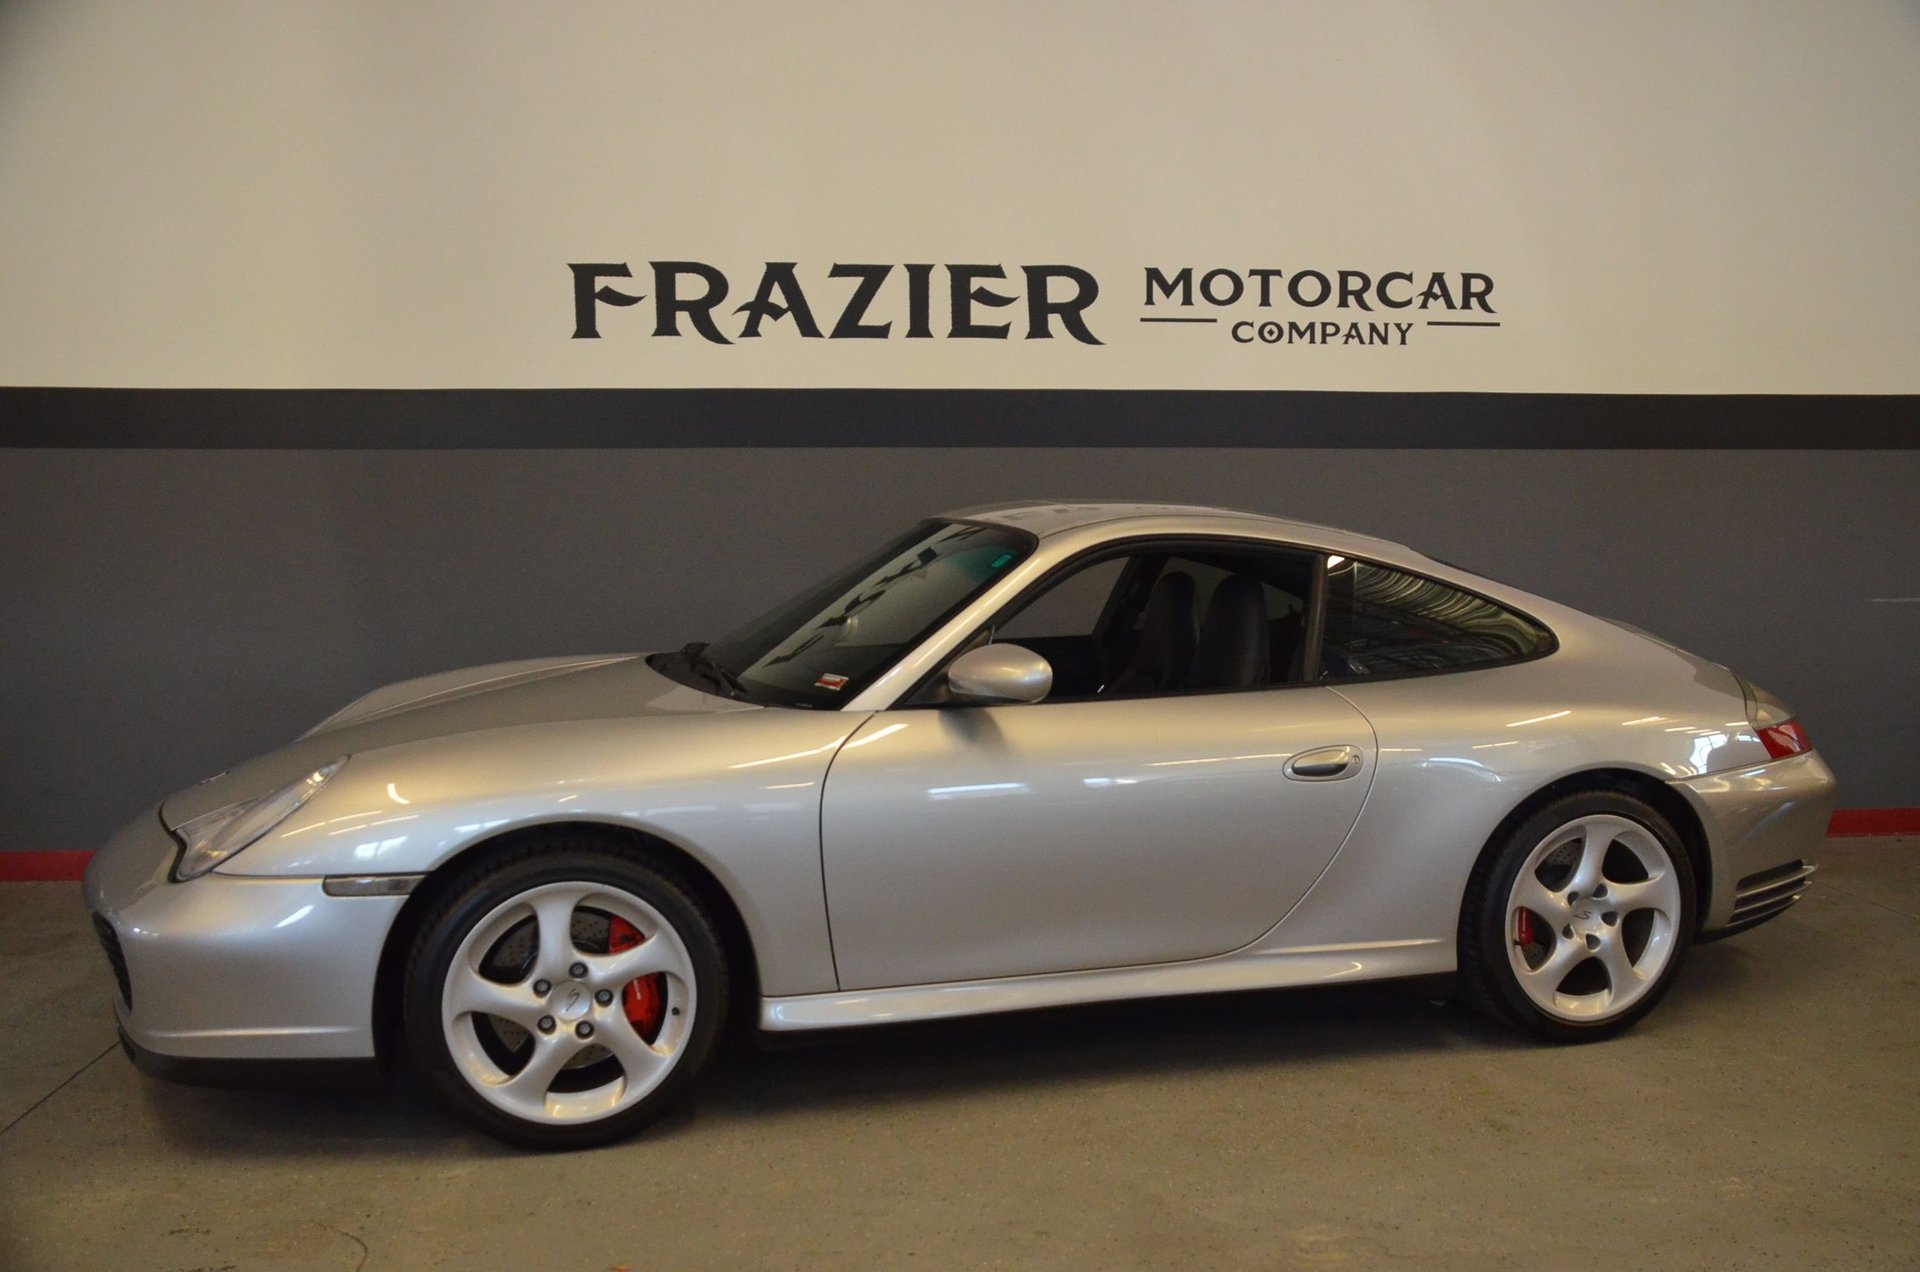 2005 Porsche 911 C4S | Frazier Motorcar Company